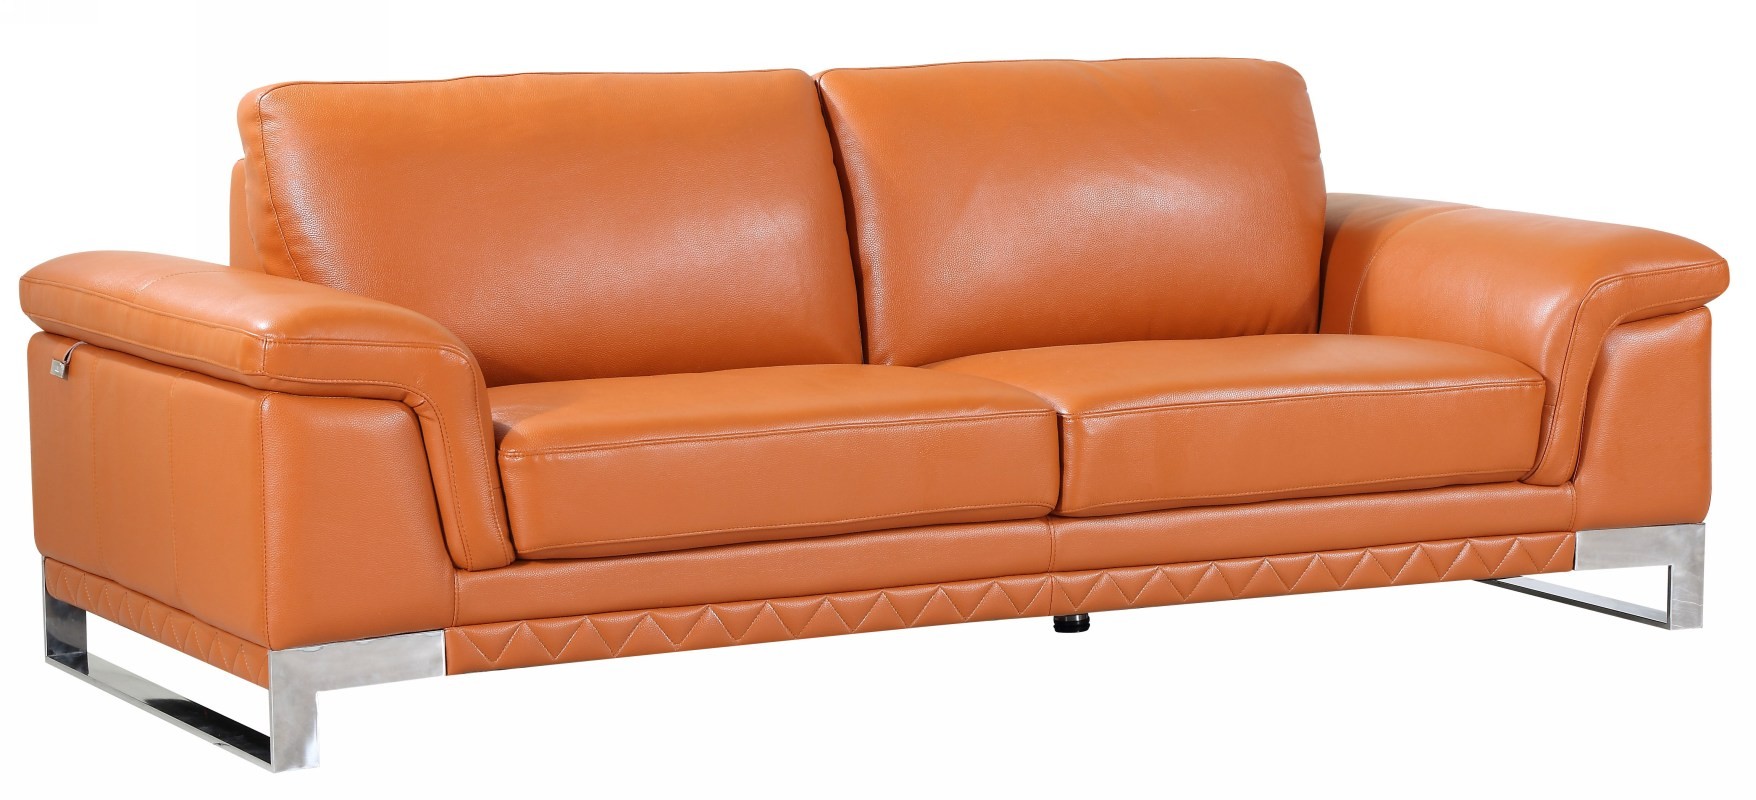 camel leather sofa macys